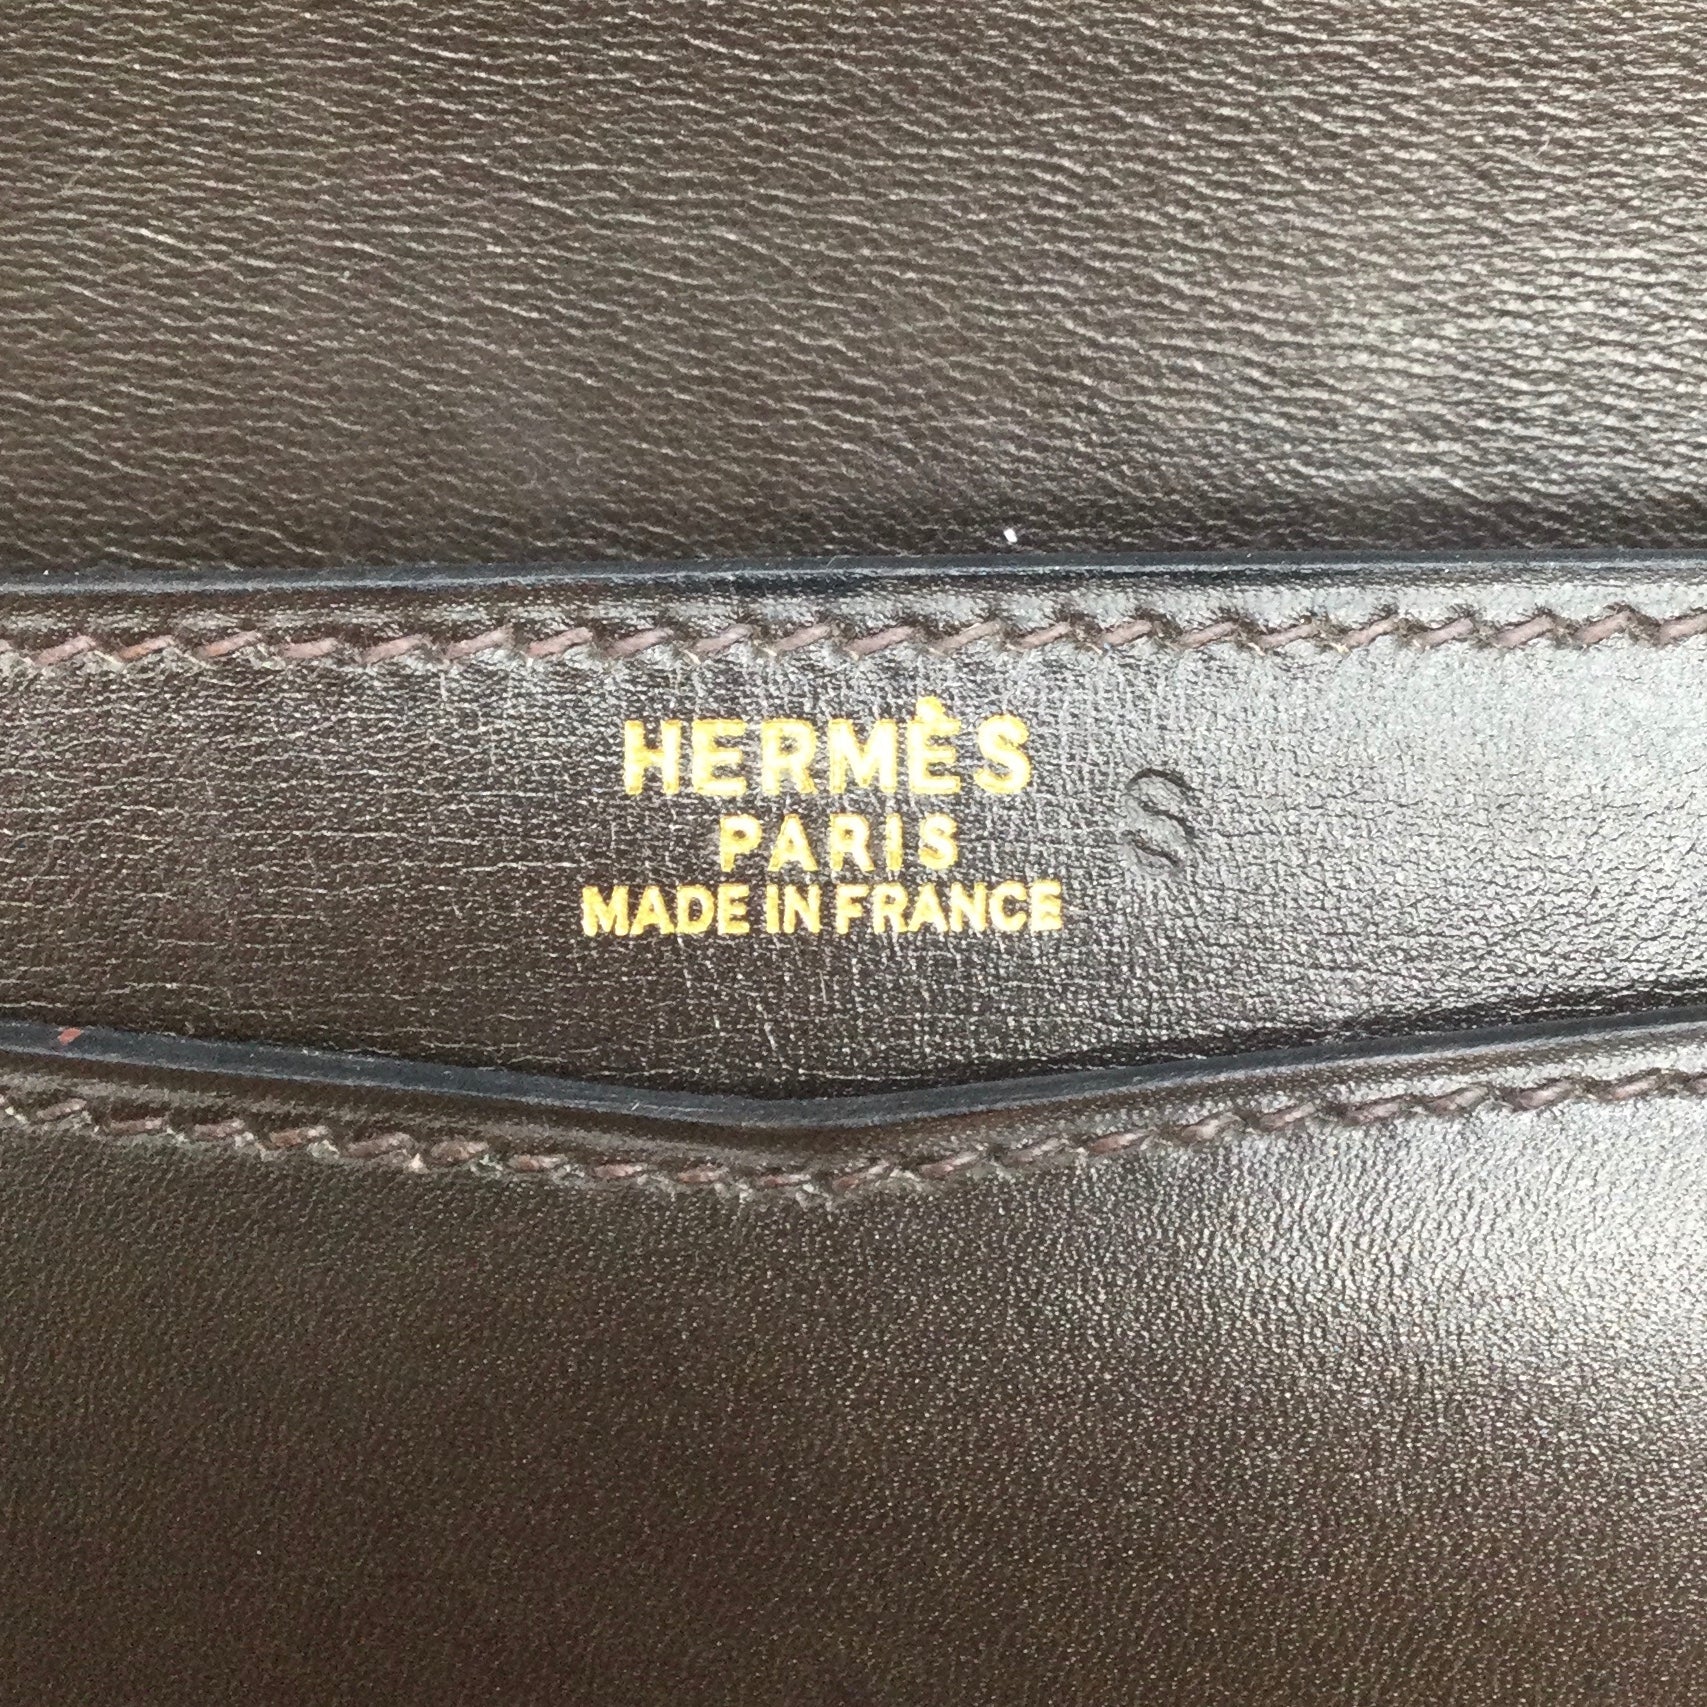 Hermès Faco Box Brown Leather Clutch